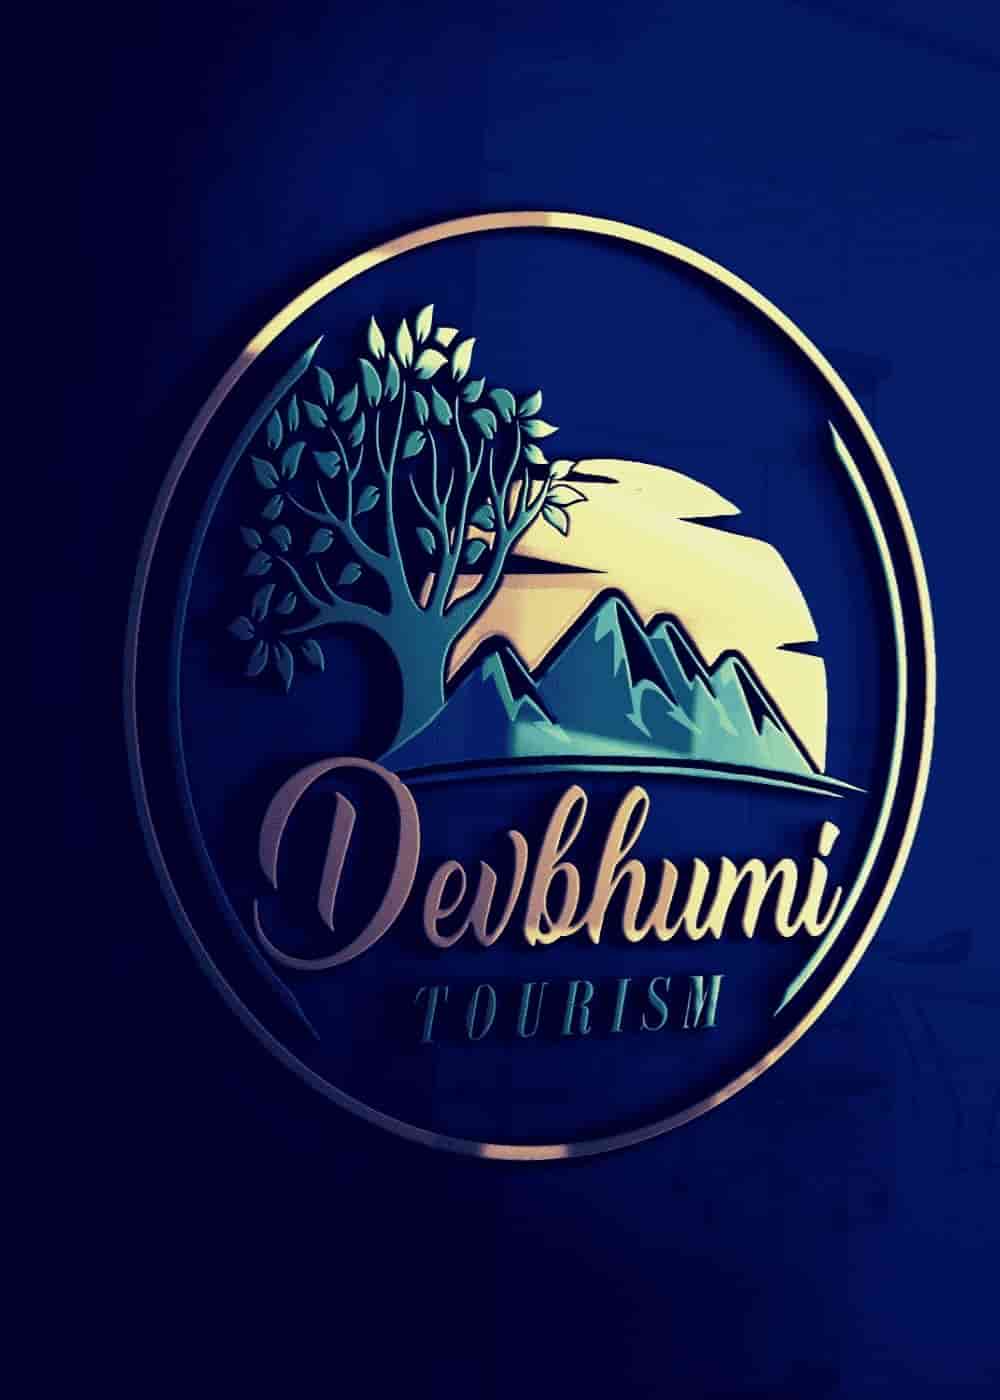 about devbhumi tourism